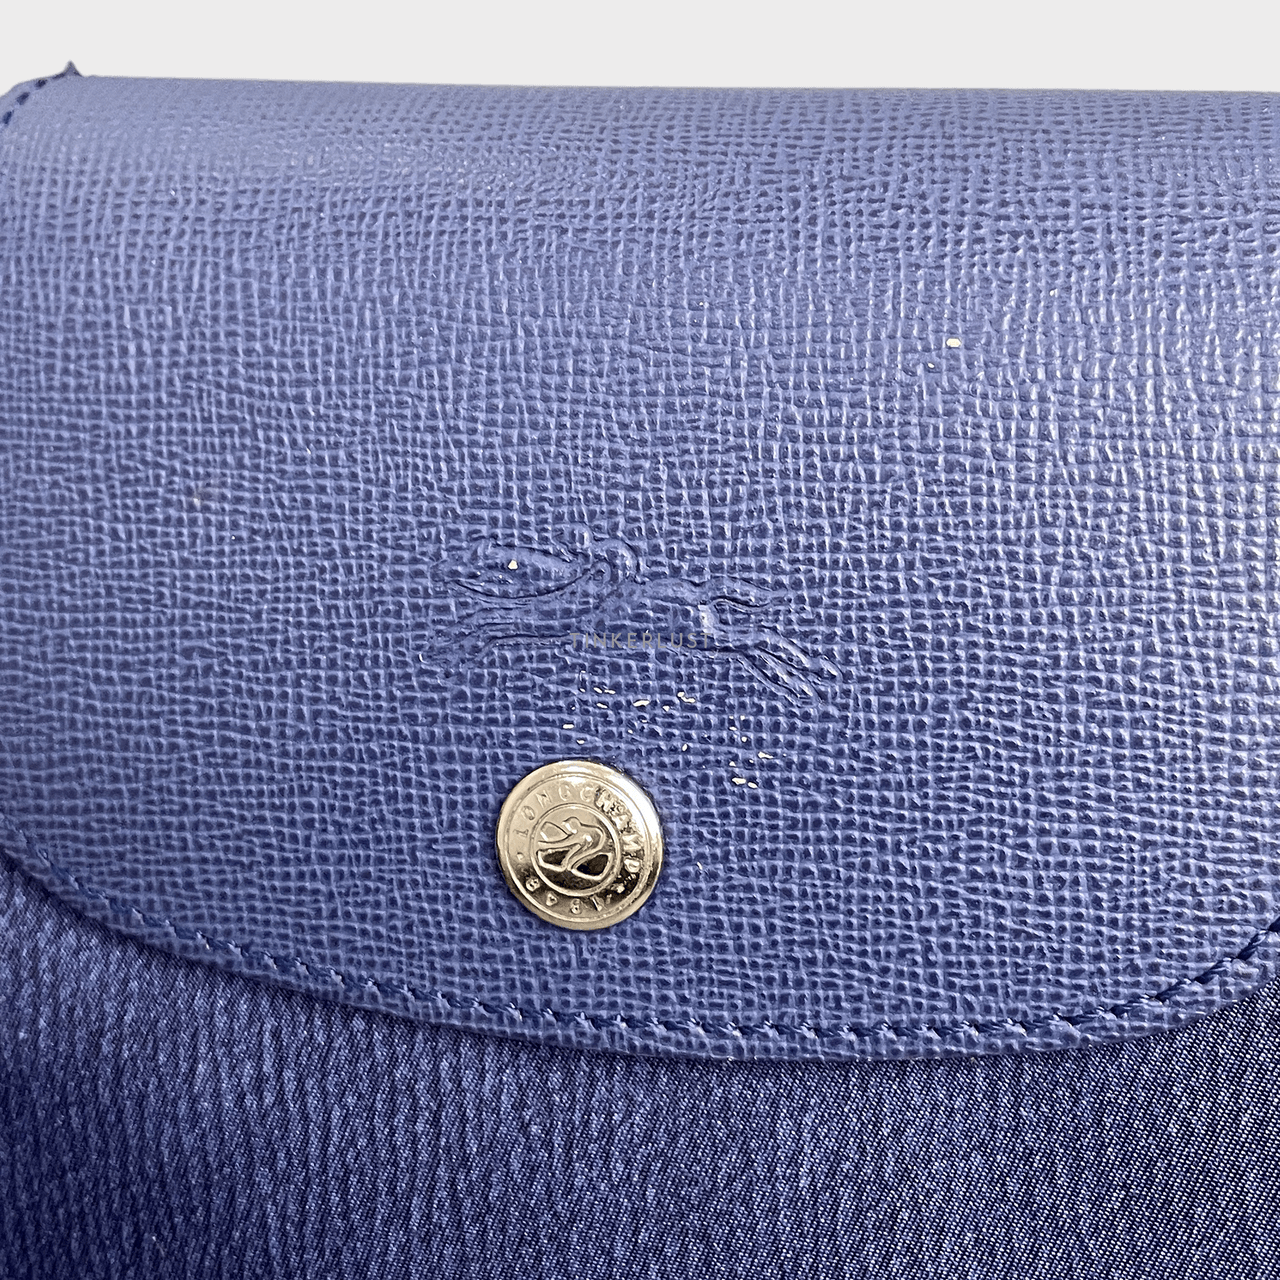 Longchamp Le Pliage Jeans Small Blue Tote Bag